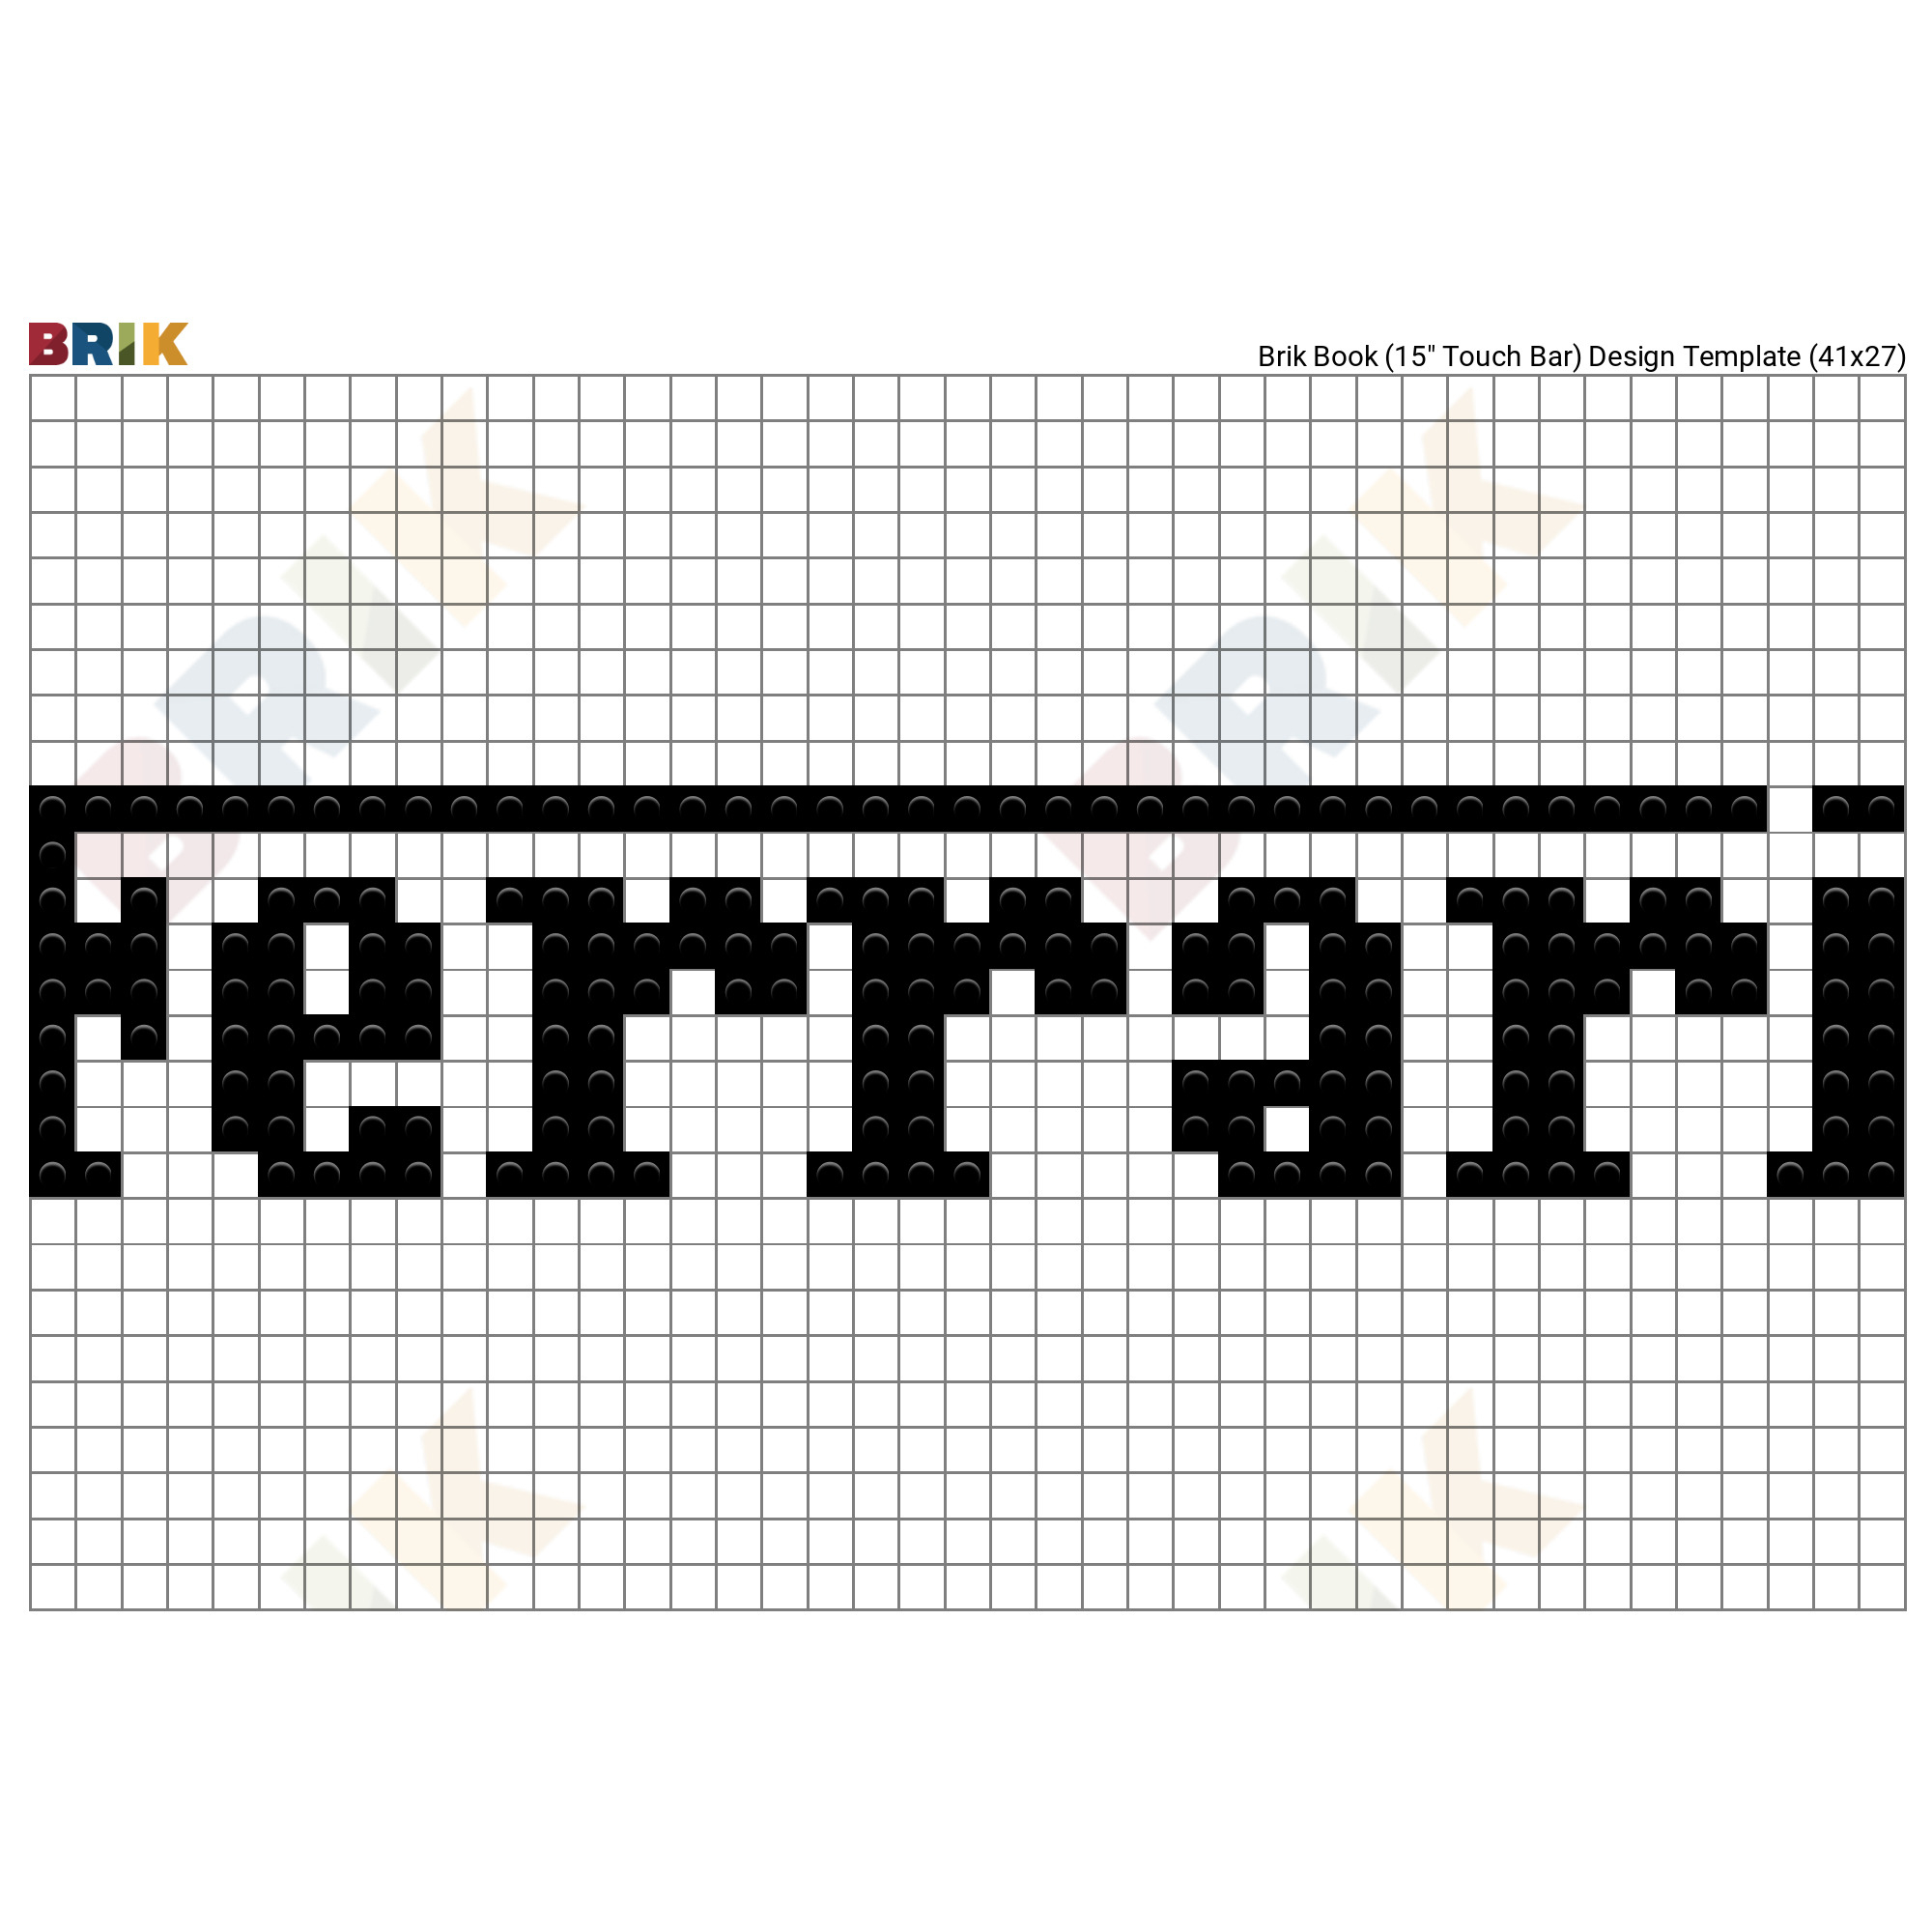 Ferrari Pixel Art – Brik pour Voiture Pixel Art